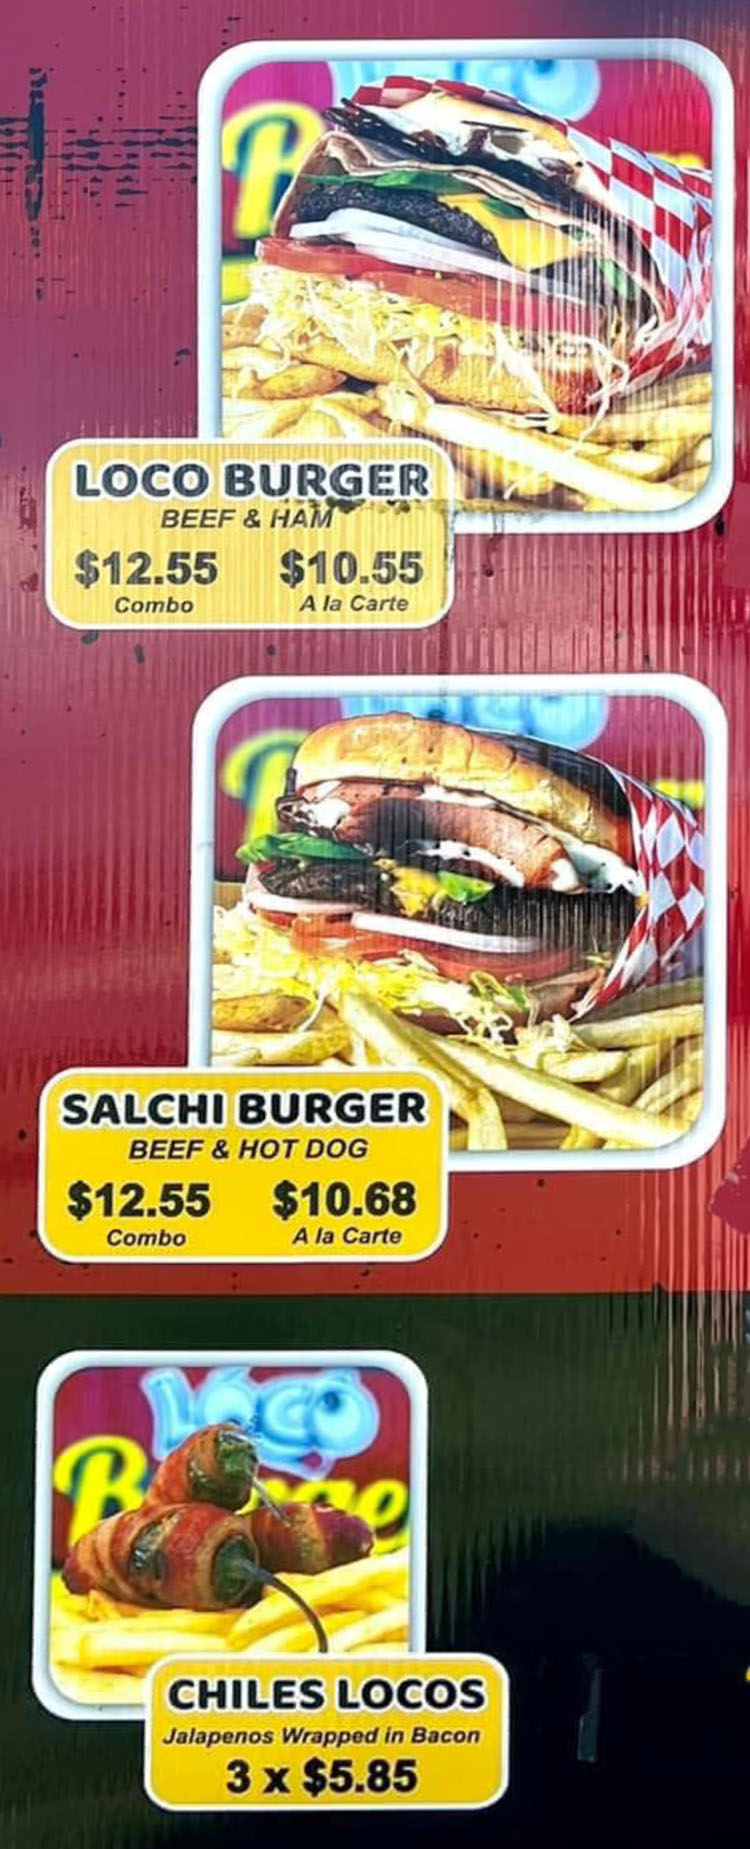 Loco Burger food truck menu - burgers